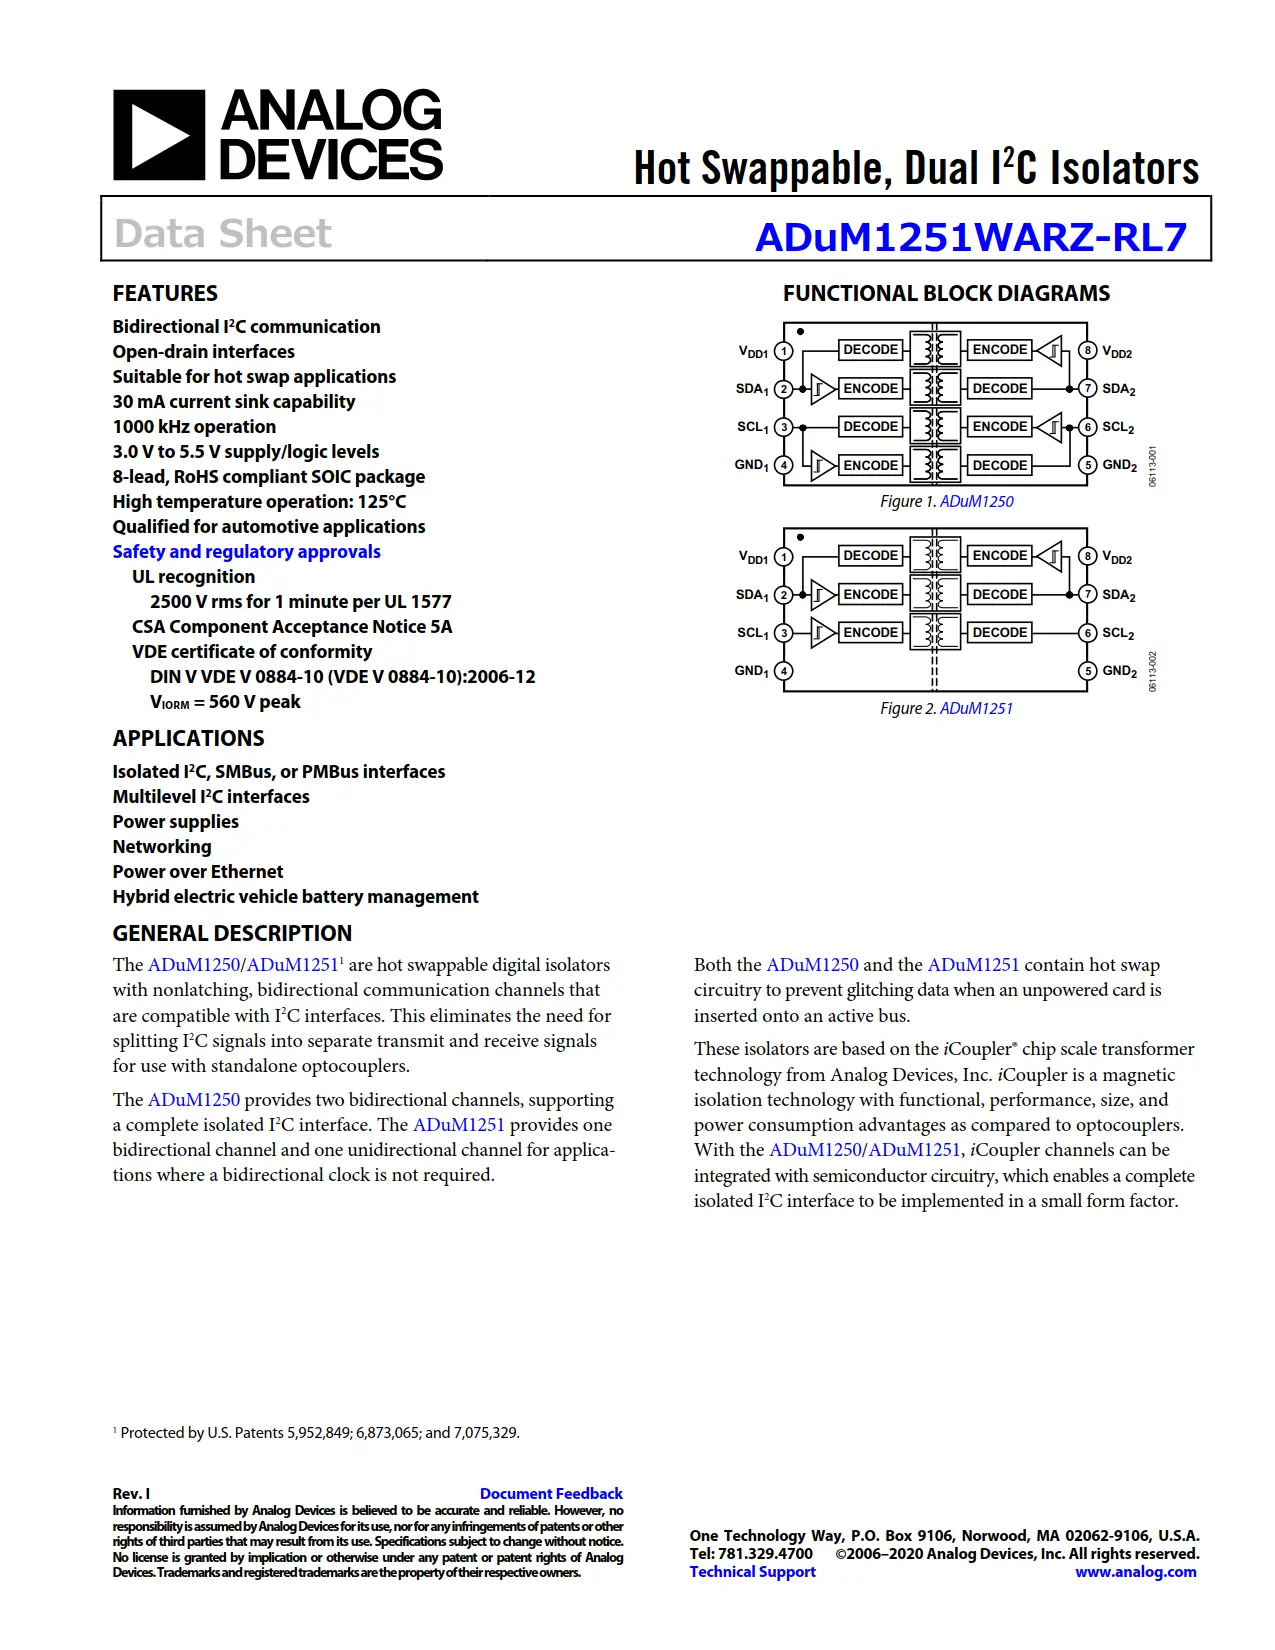 ADuM1251WARZ-RL7 DataSheet